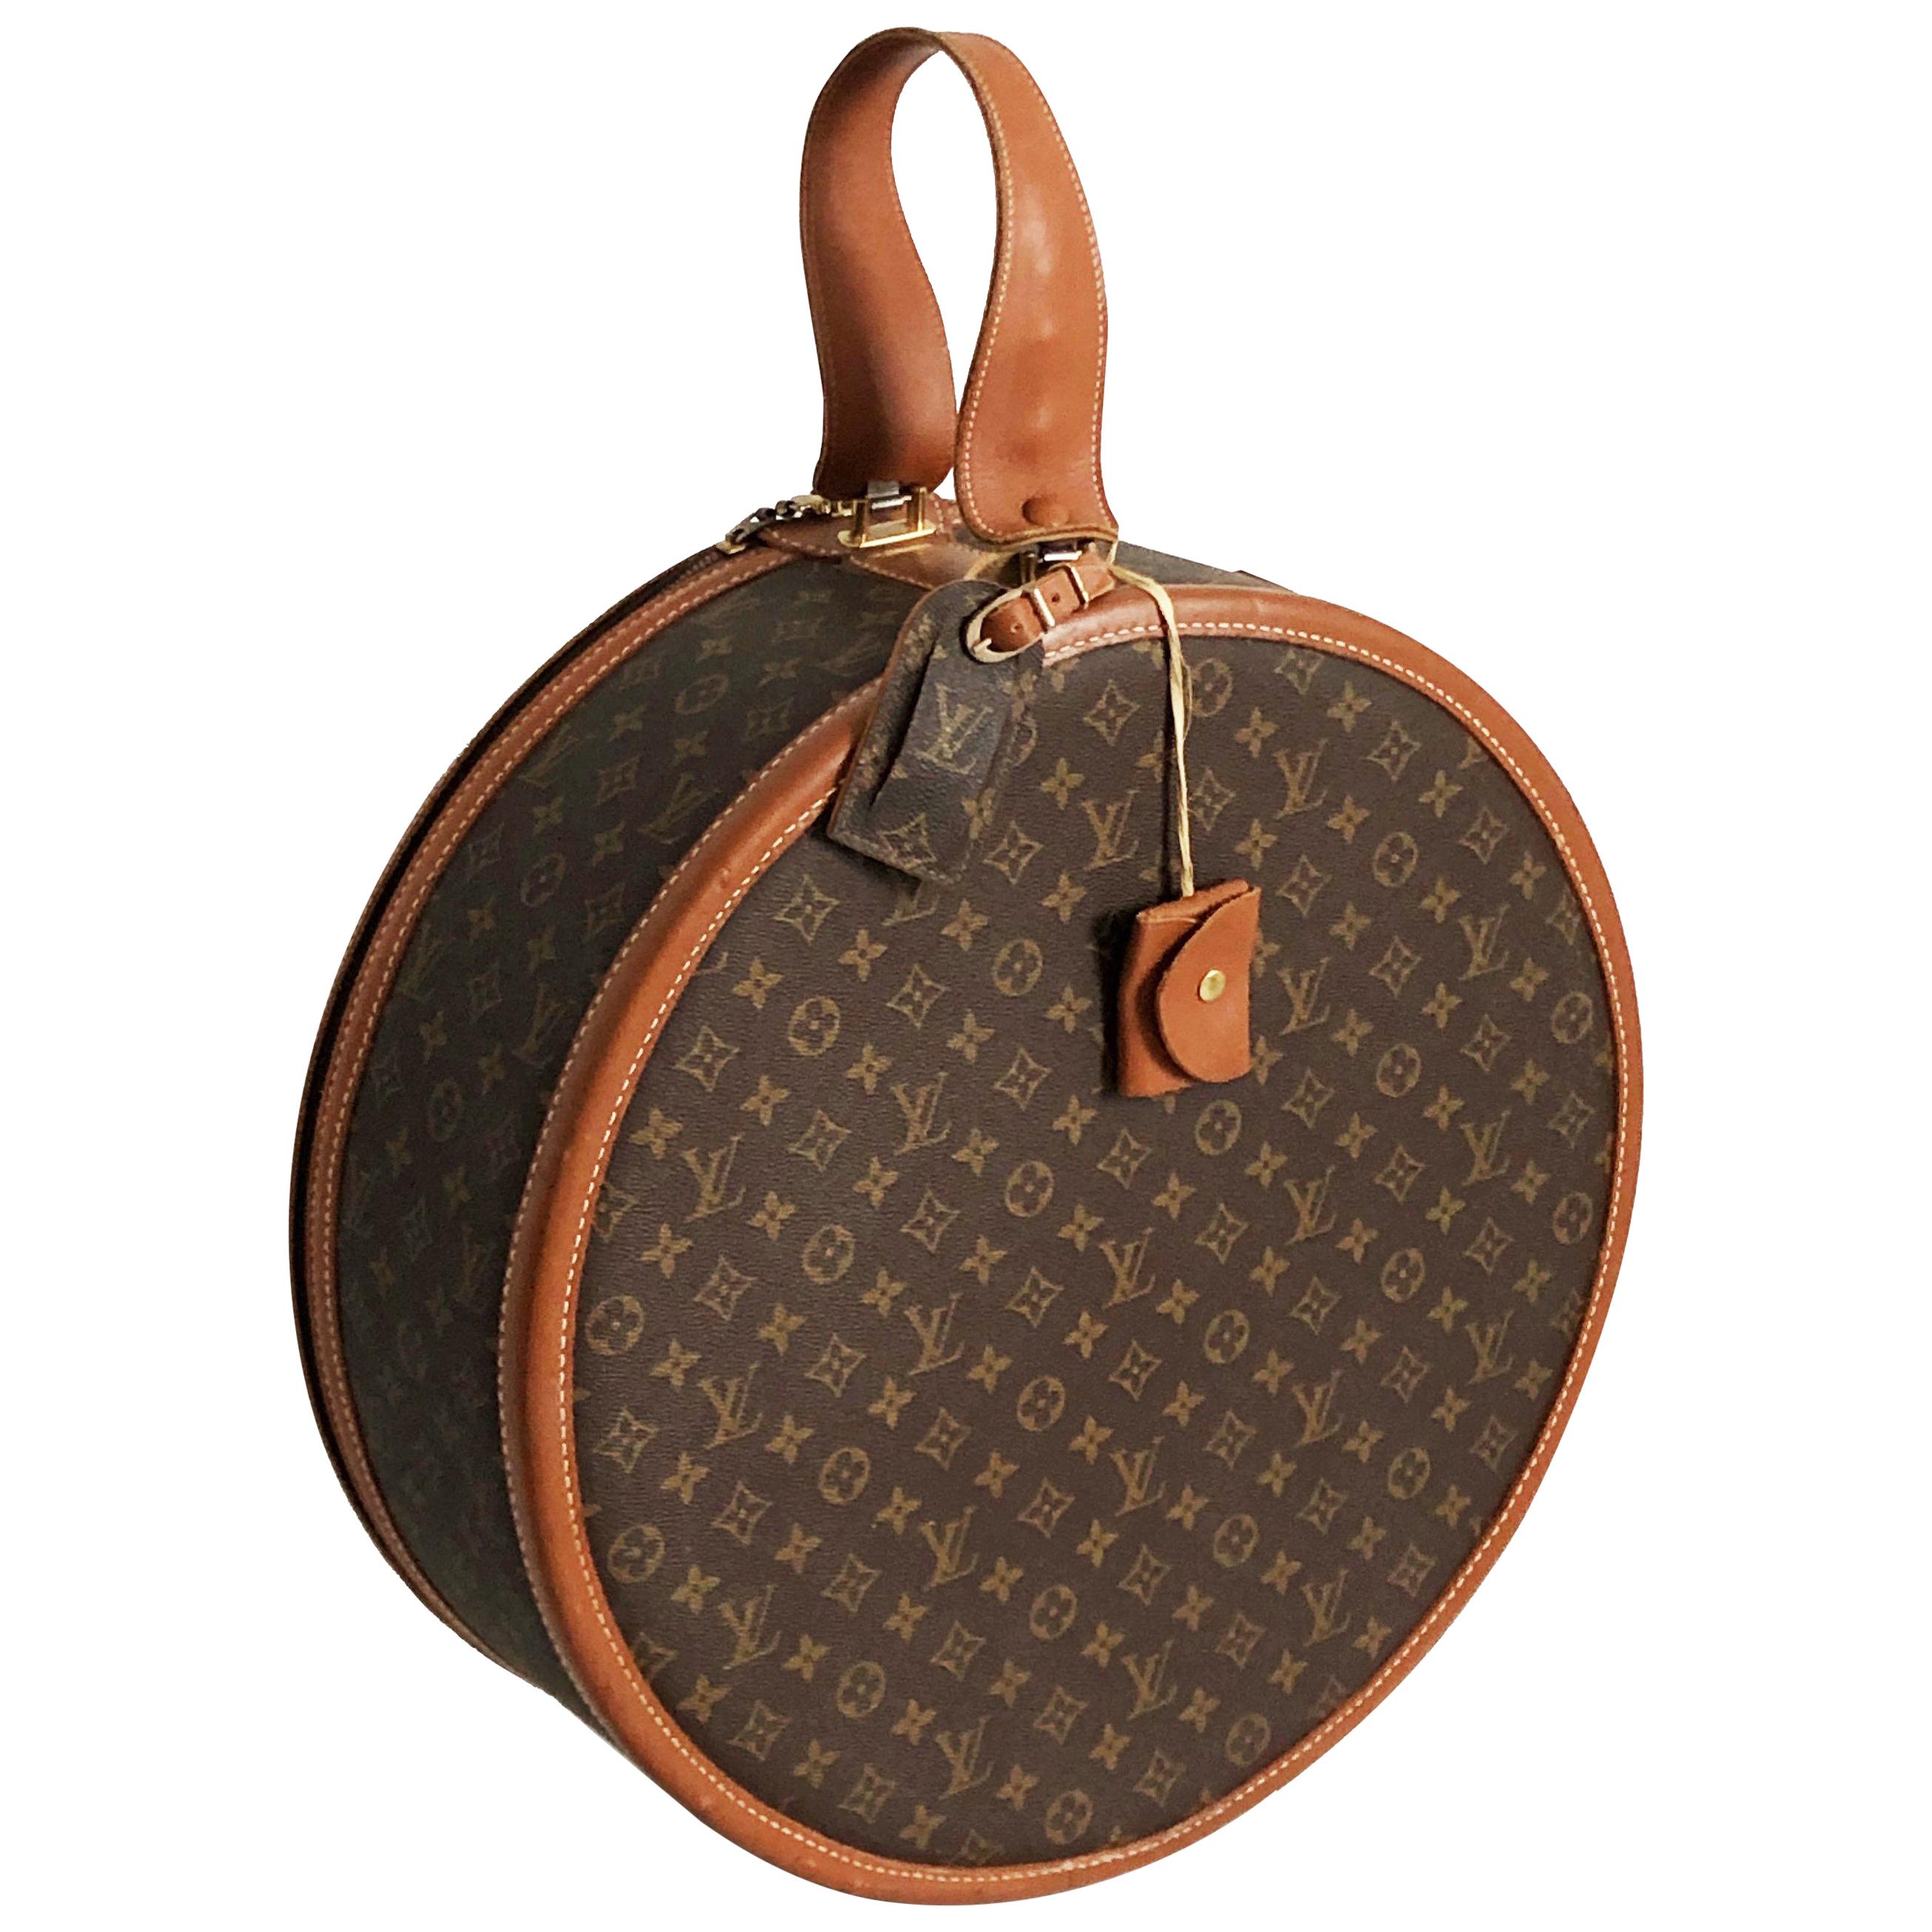 Louis Vuitton x The French Company Boite Chapeaux Round Hat Box 45cm Travel Bag